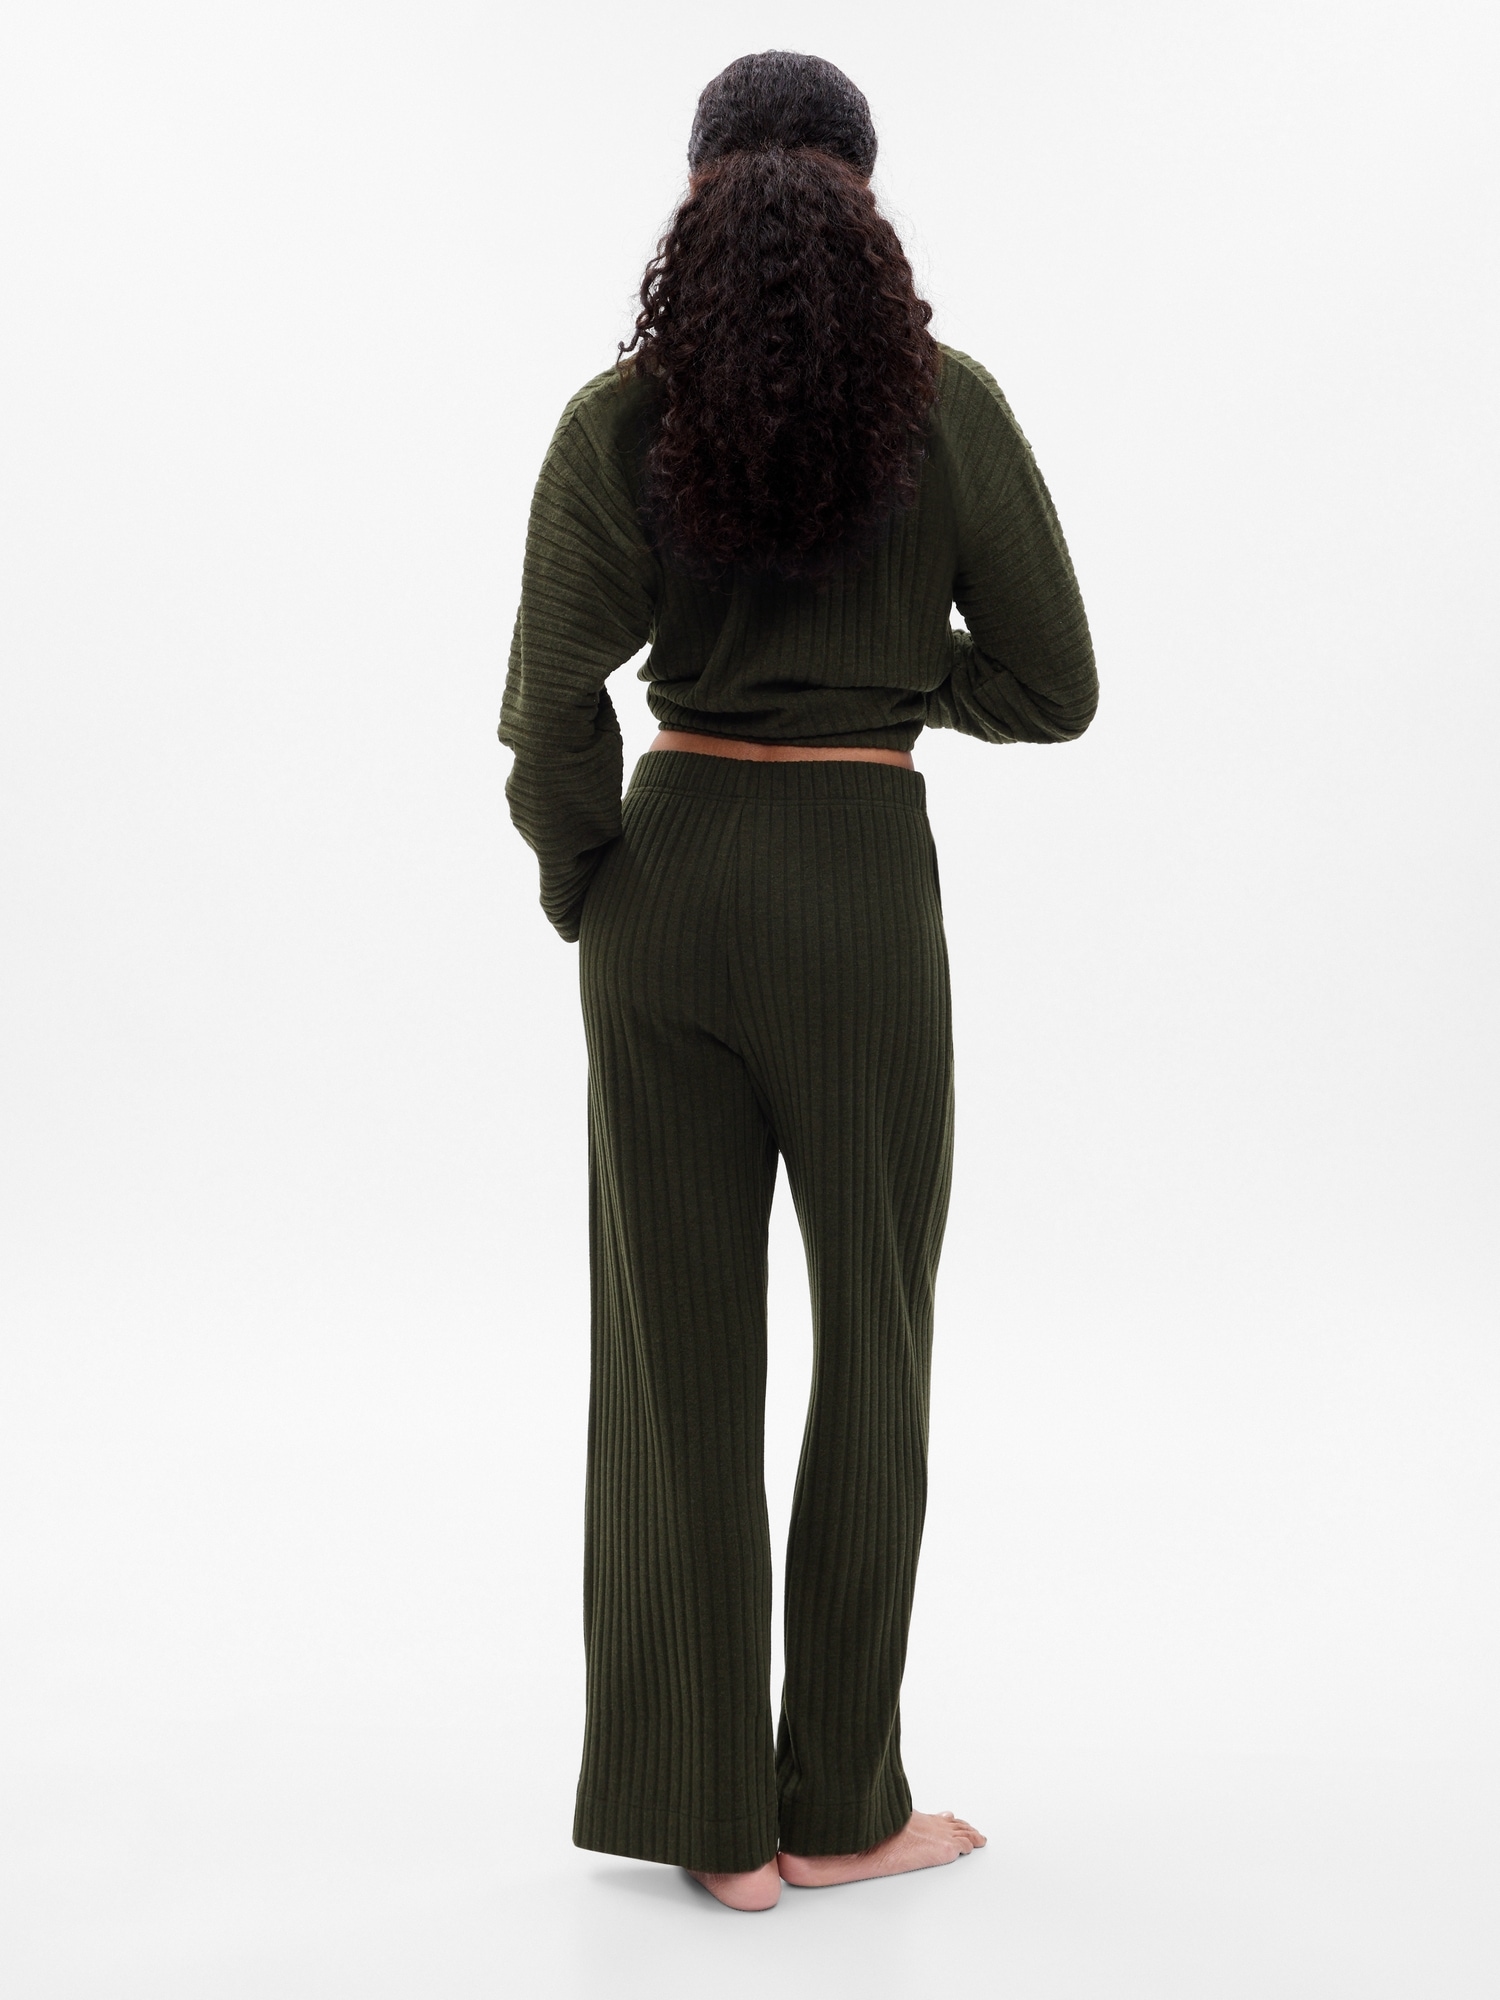 Gibobby Pajamas Pants for Women Comfy Fleece Pants Casual Stretch